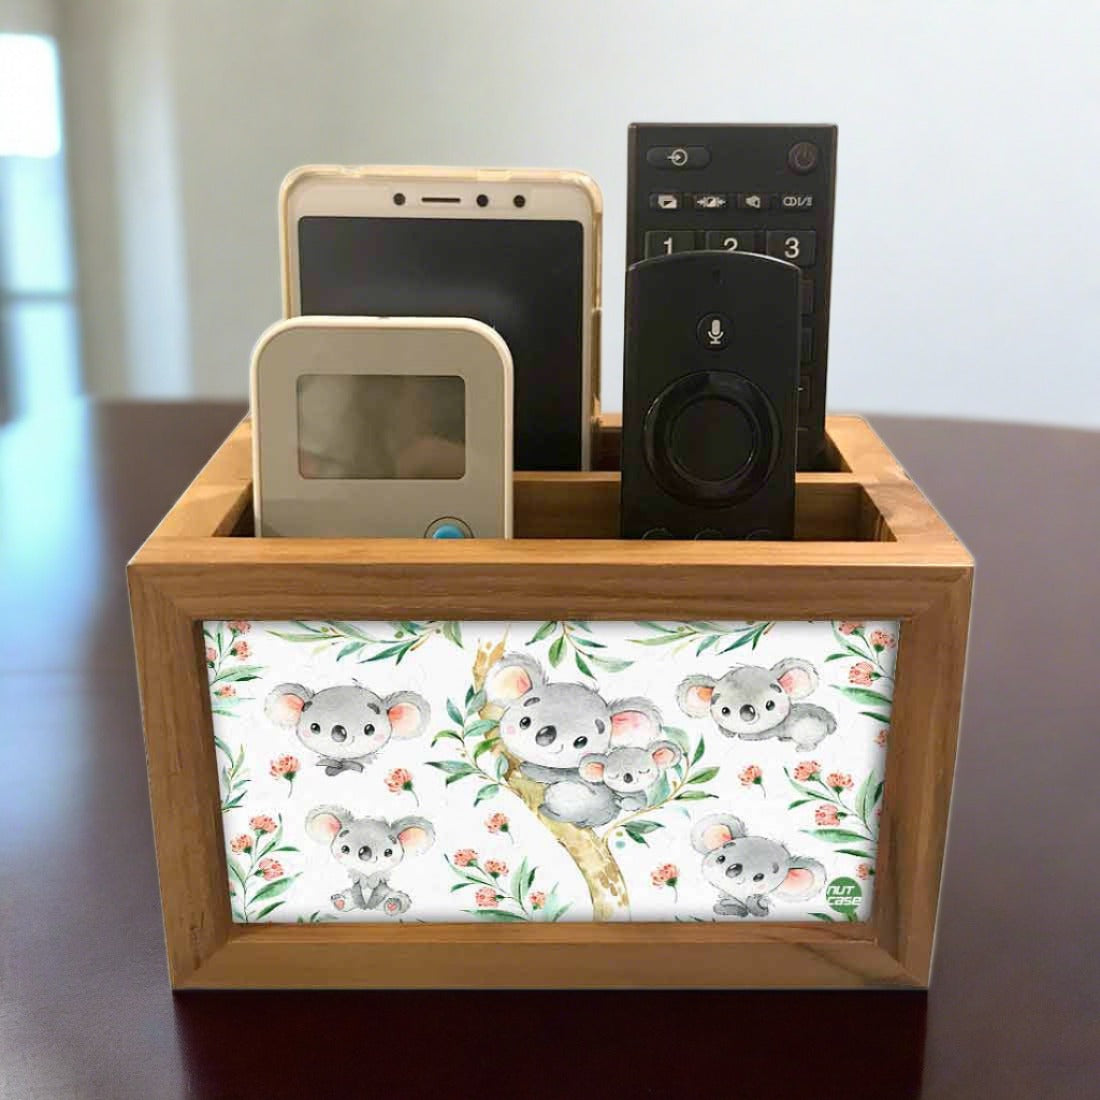 Nutcase Designer Wooden Remote Control Holder Stand Organizer Caddy for TV/AC Remote - Cute Koala Nutcase